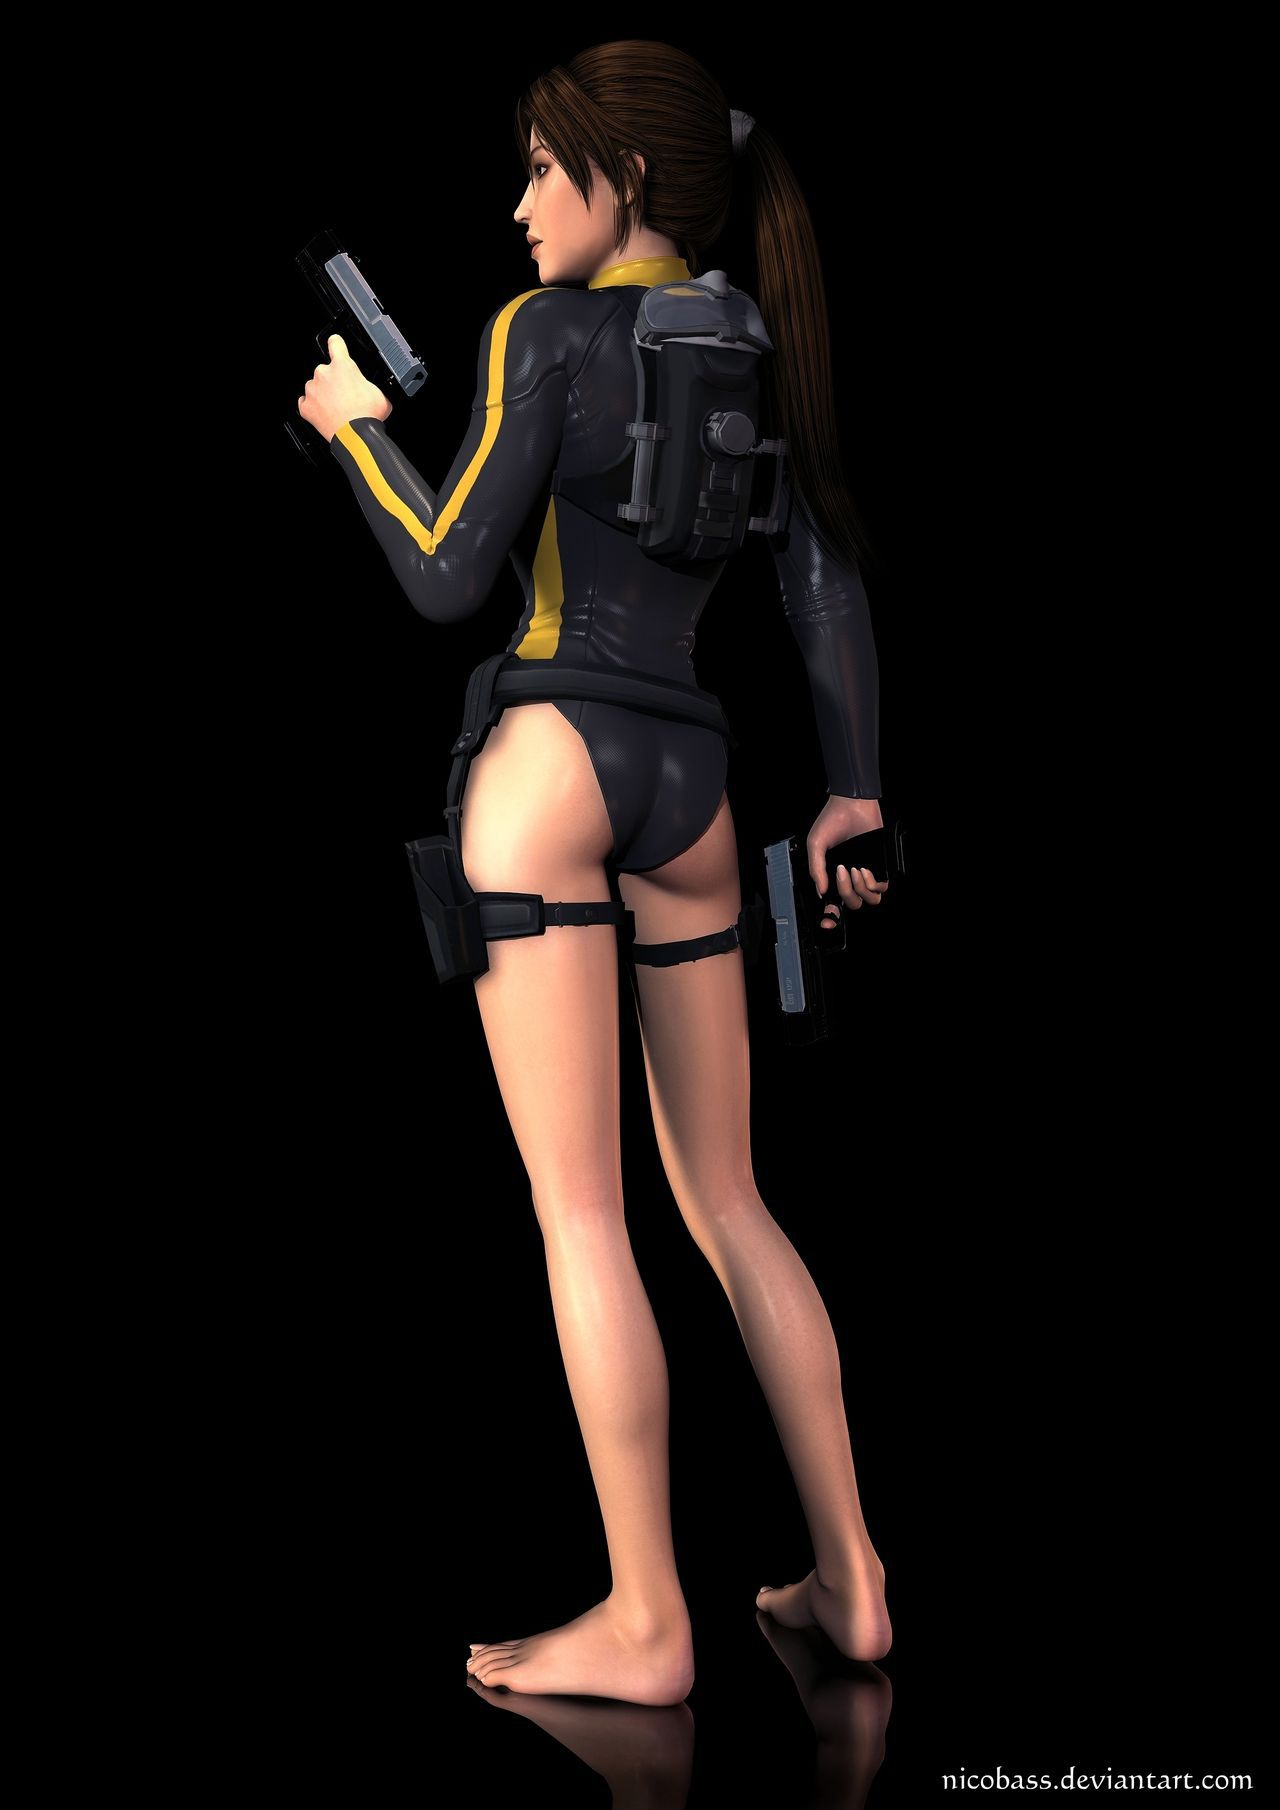 A Lara Croft Collage: Part III 38